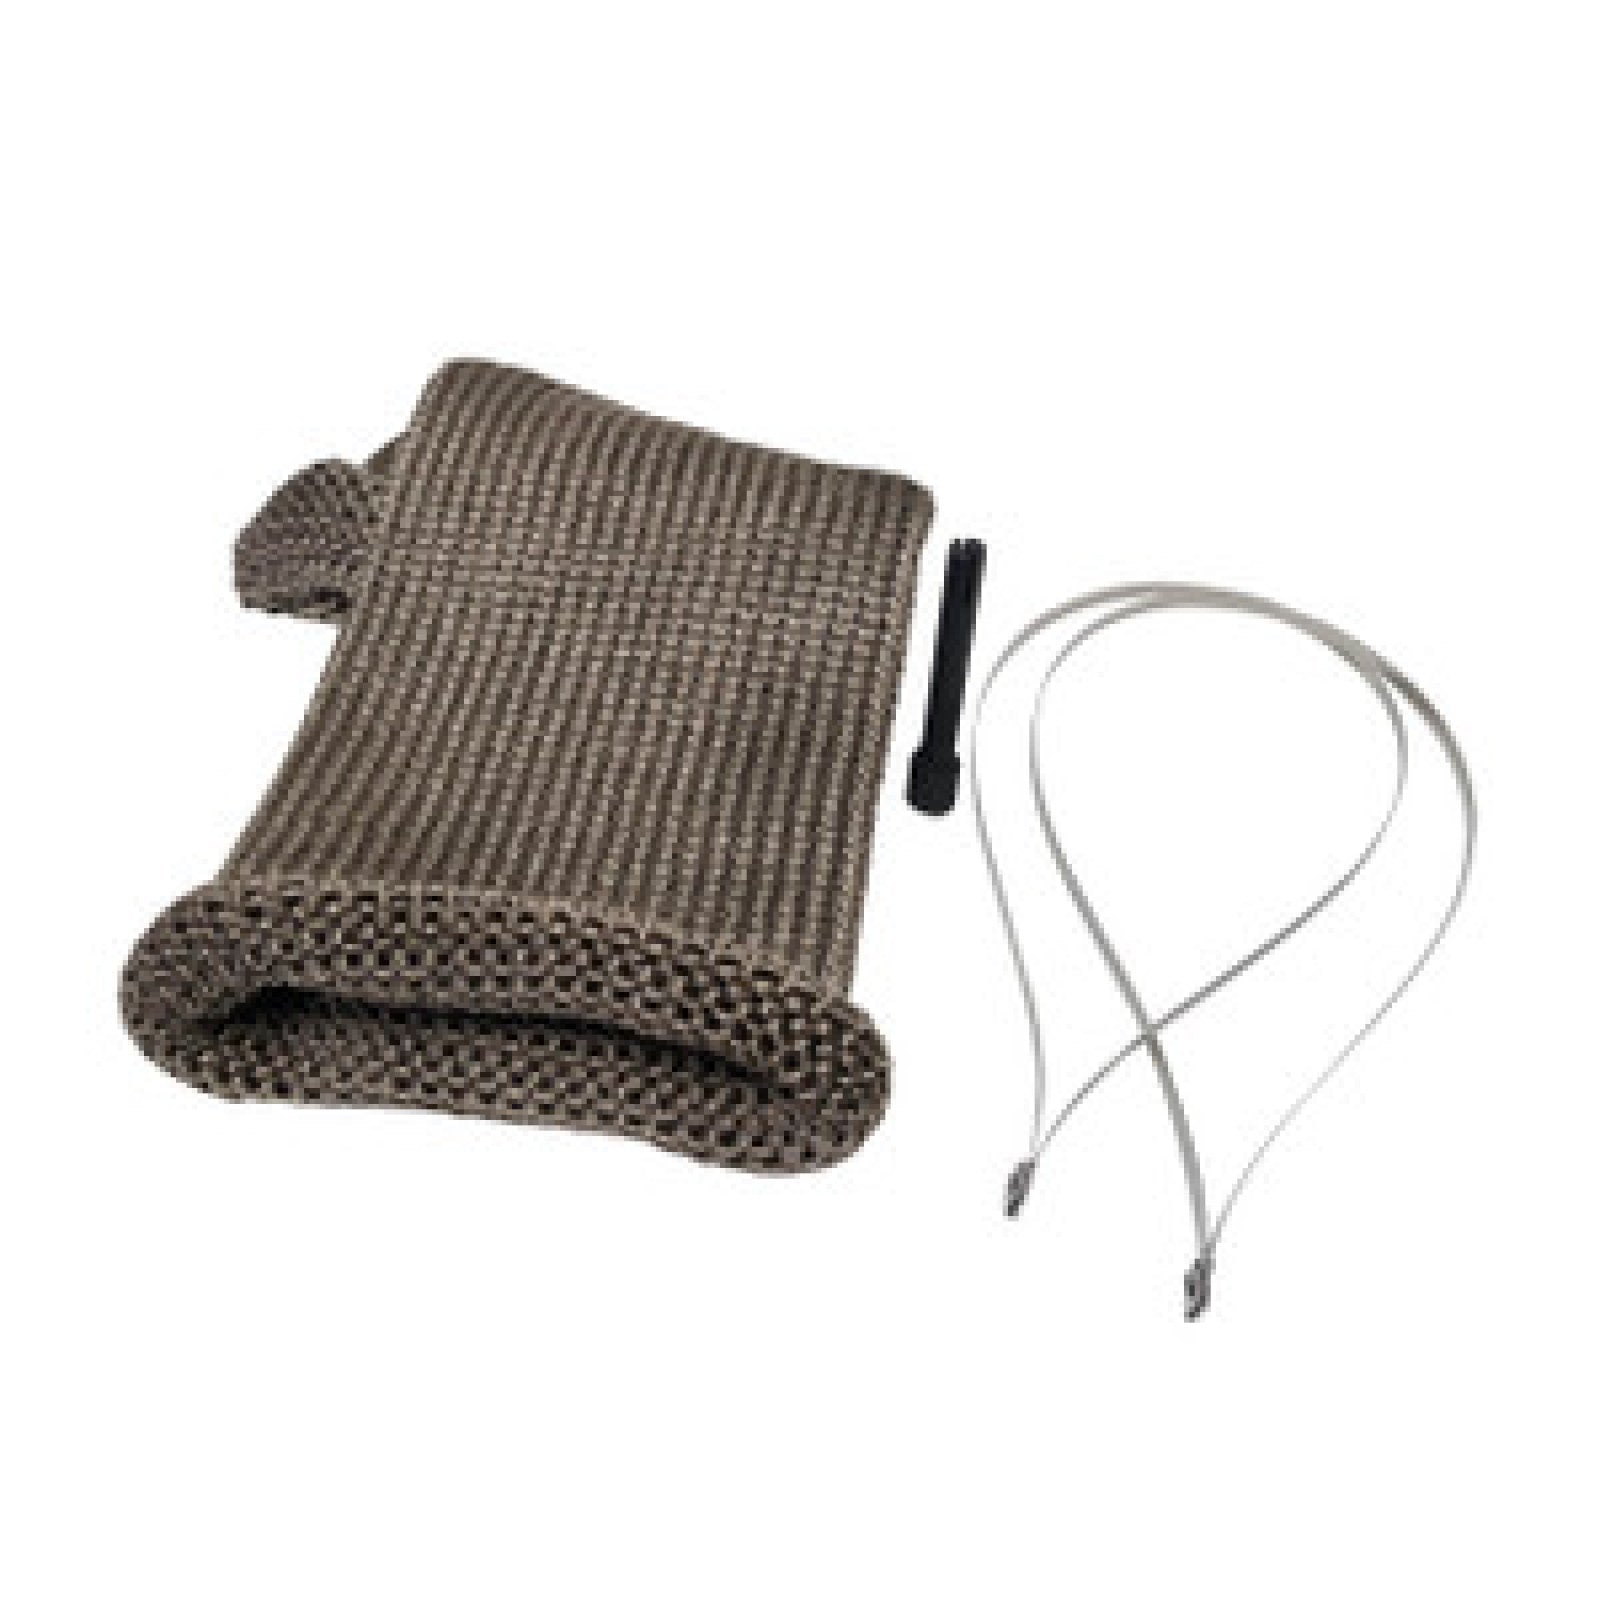 DEI - Titanium Knit Exhaust Sleeve - 4" x 24"